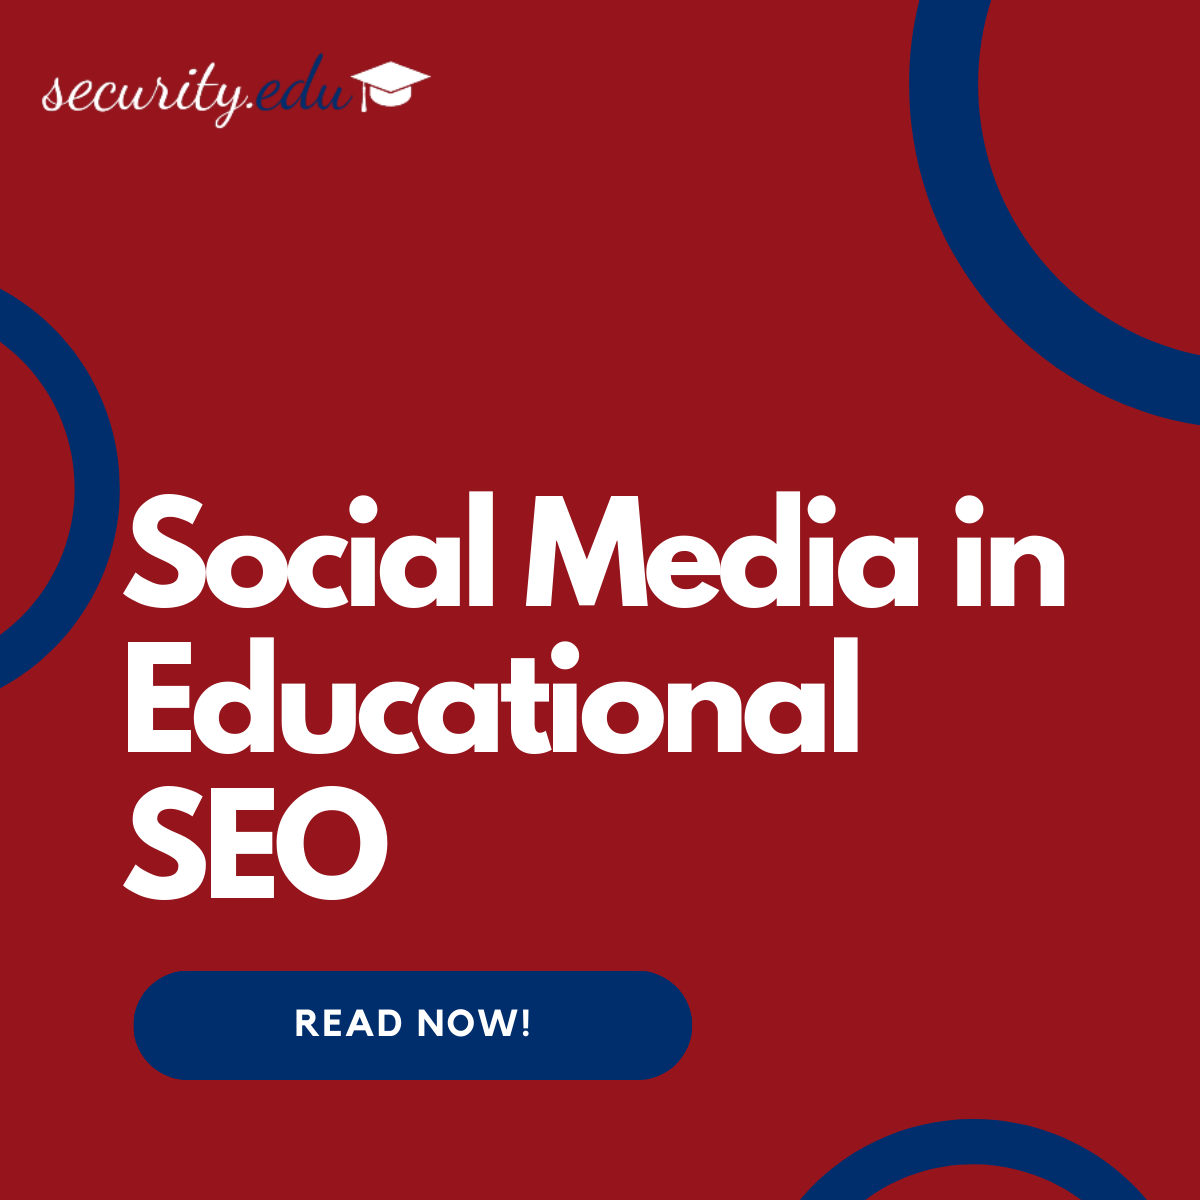 Social Media in Educational SEO